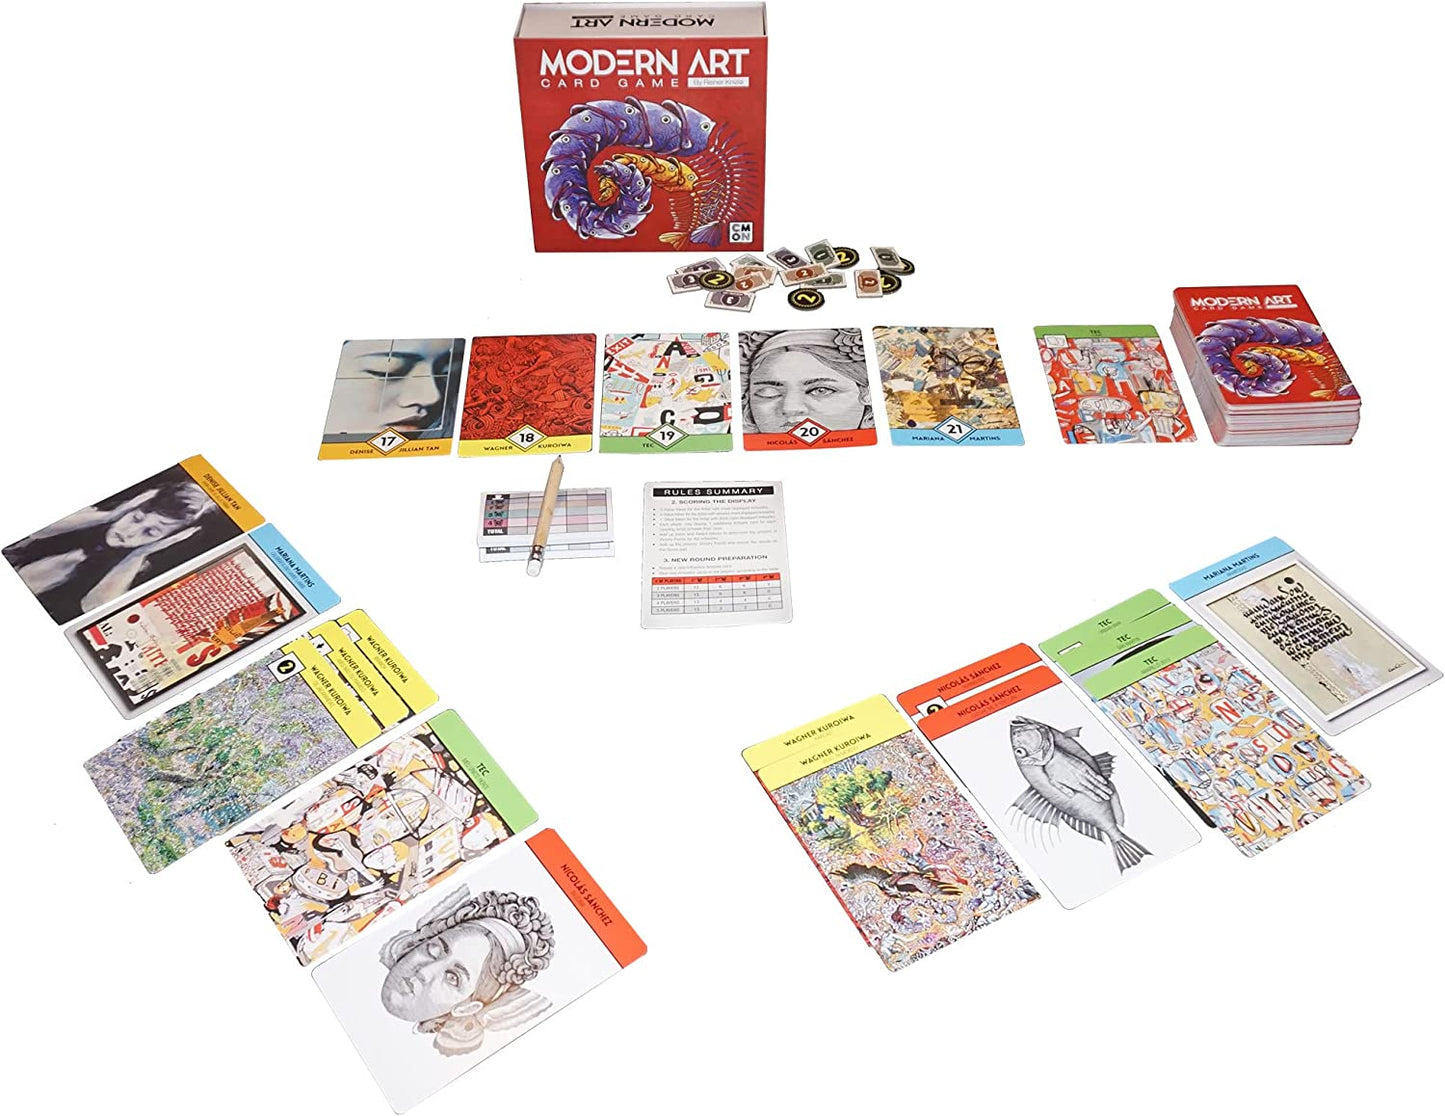 Modern Art - The Card Game CMON